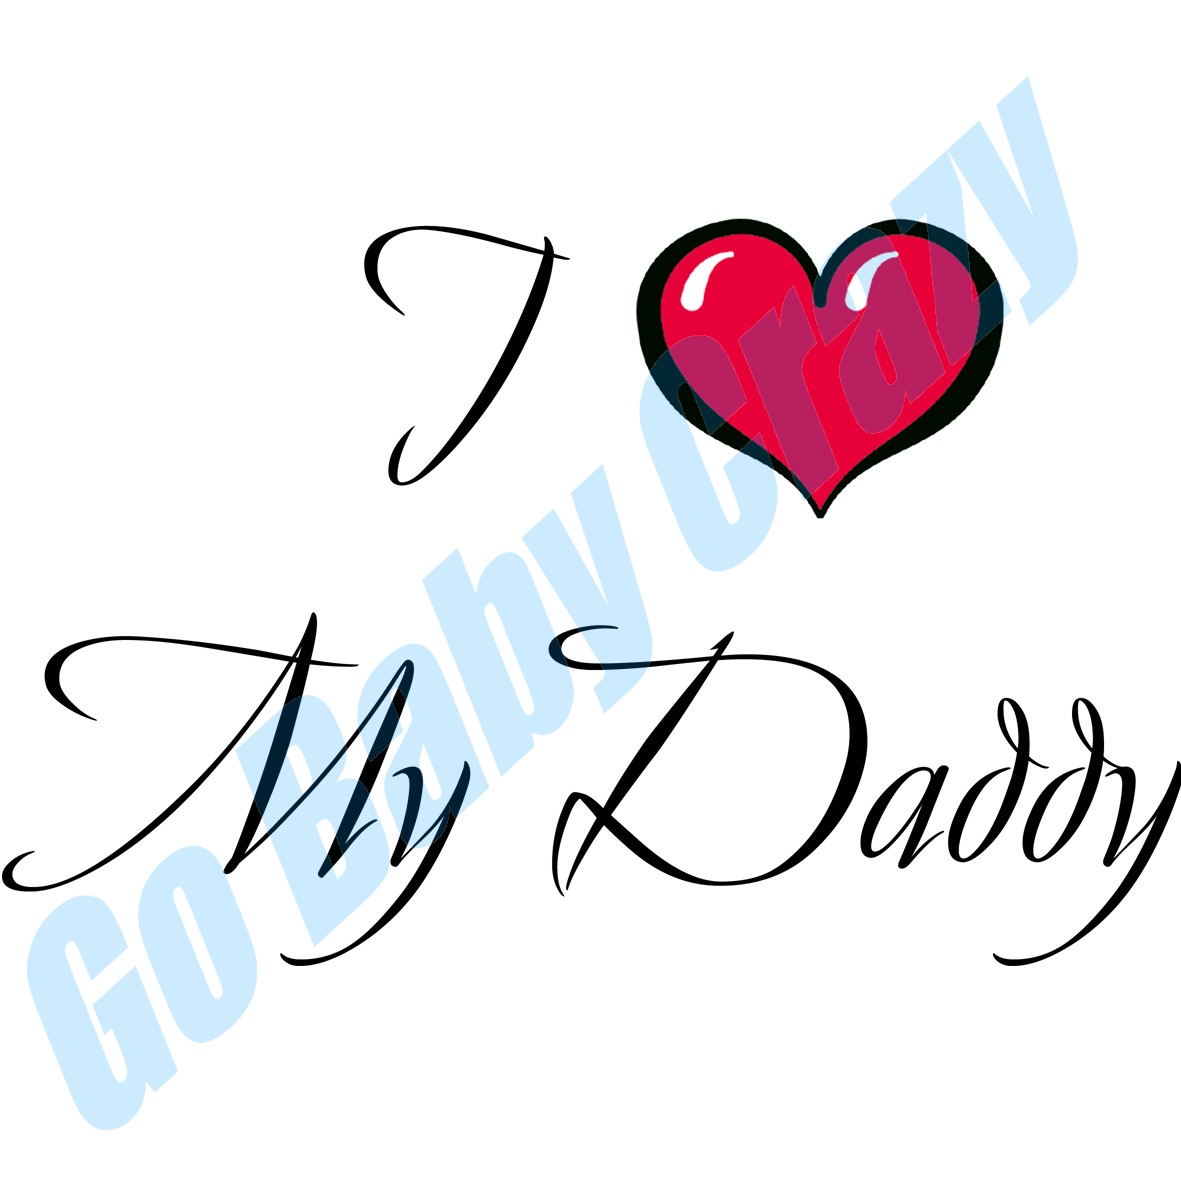 Dad Love HD Wallpaper In Imageci